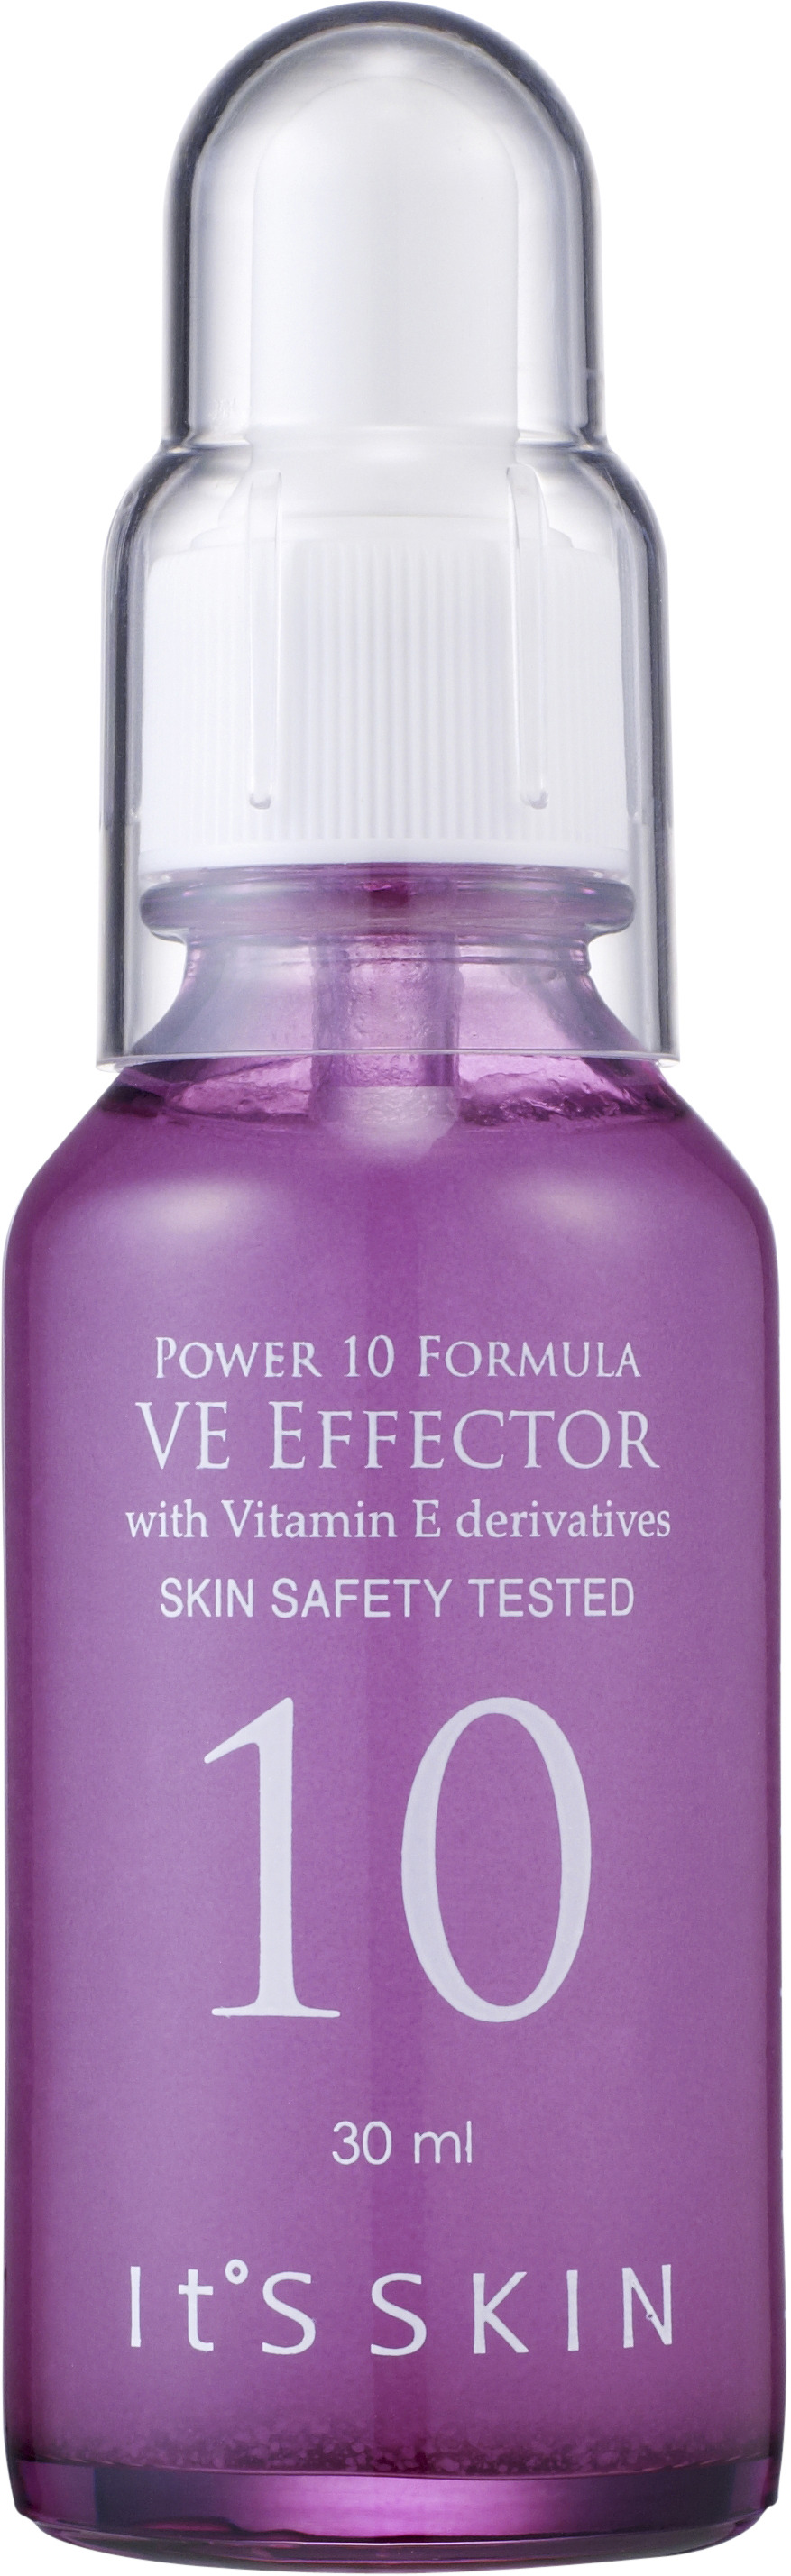 It's Skin Power 10 VE Effector Serum 30 ml